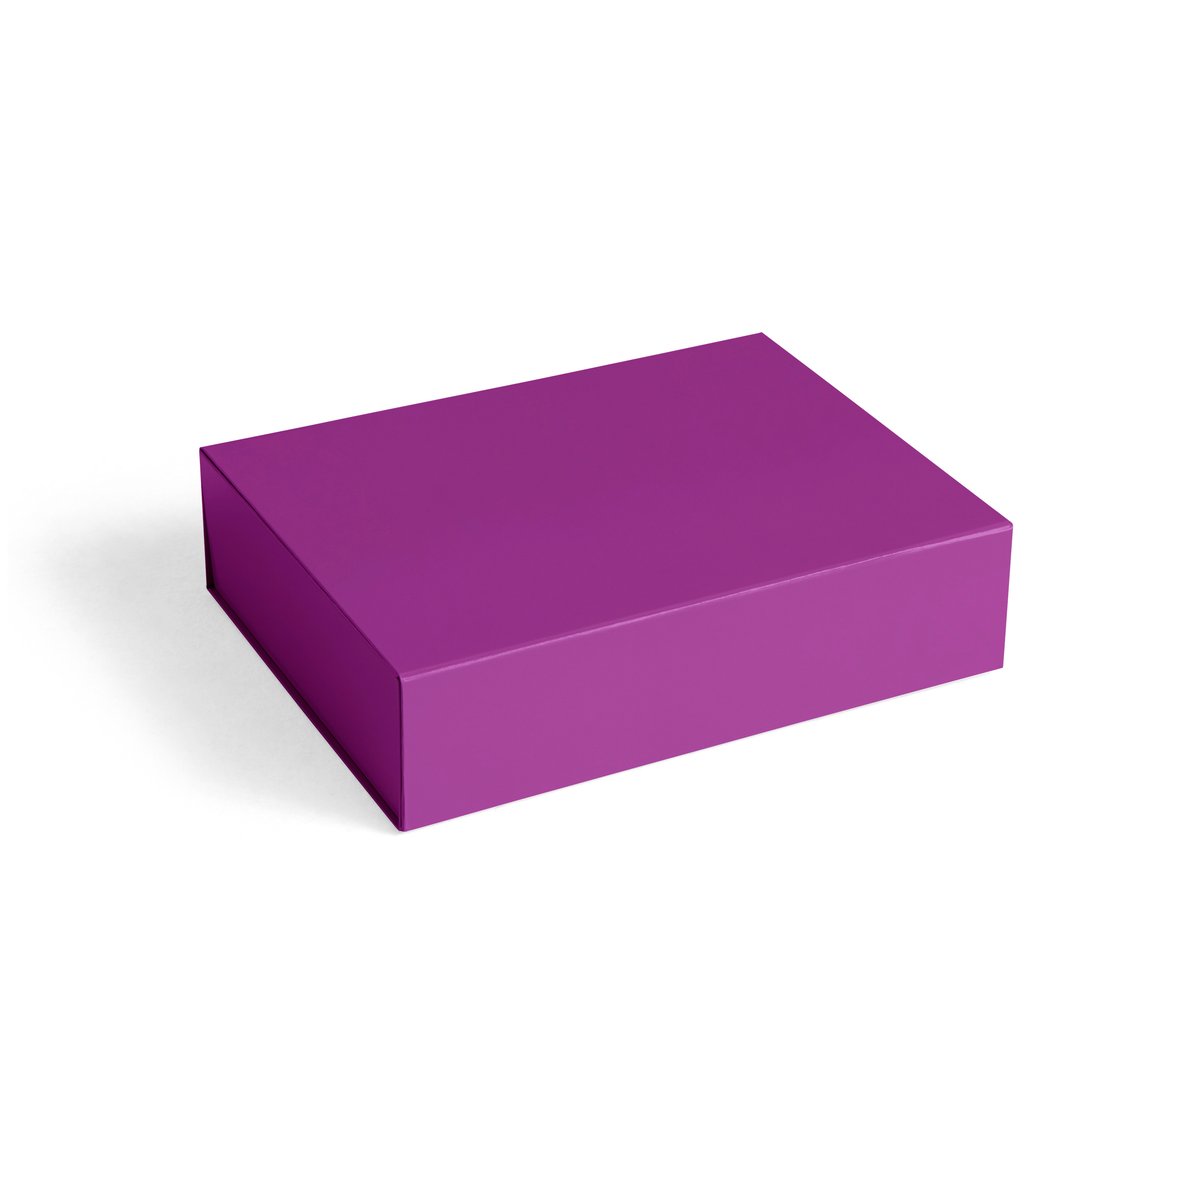 HAY Colour Storage S kannellinen laatikko 25,5×33 cm Vibrant purple